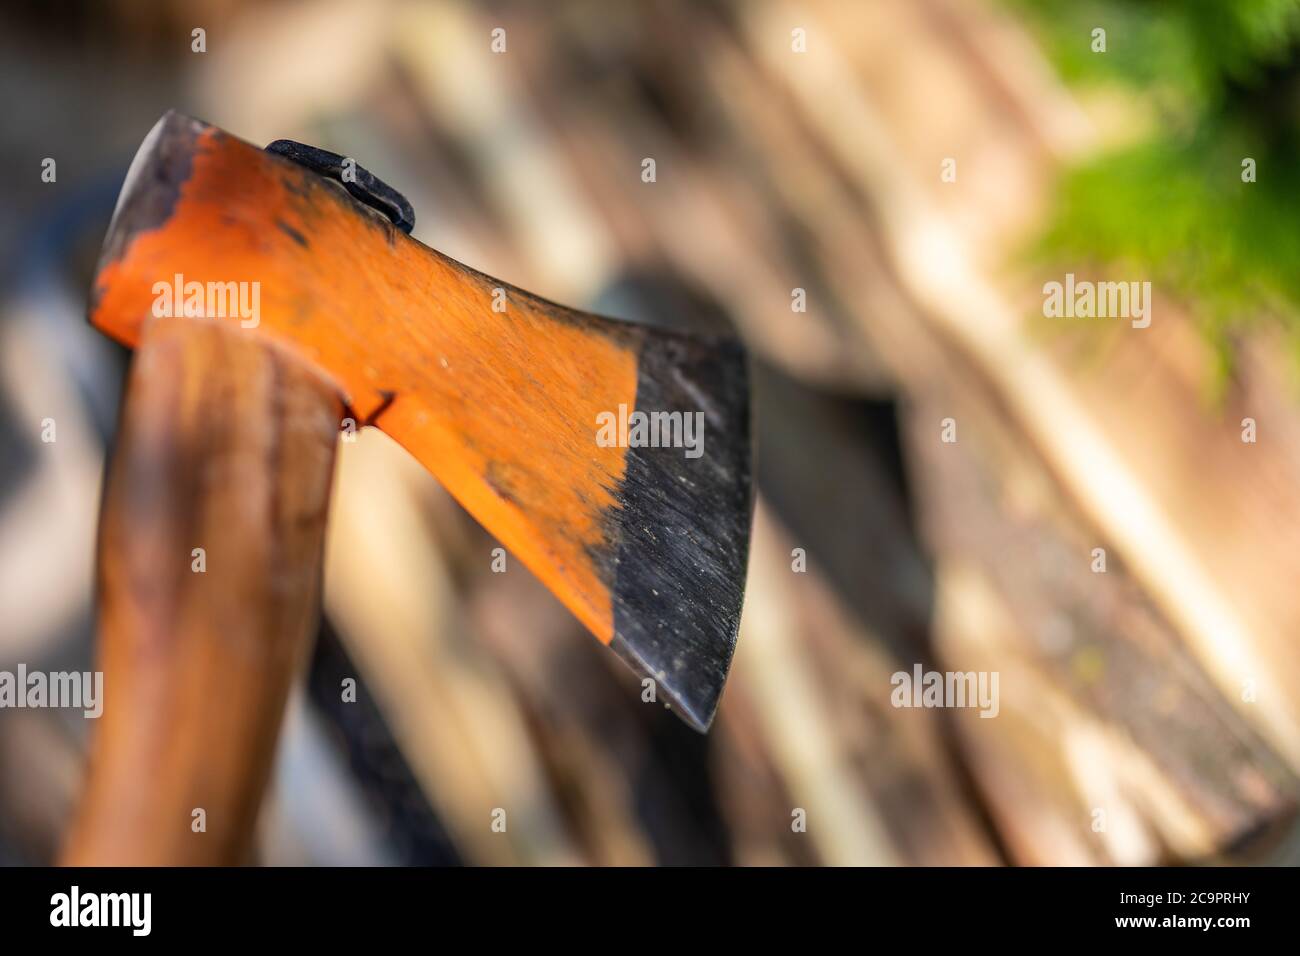 https://c8.alamy.com/comp/2C9PRHY/axe-cutting-wood-block-chopping-wood-2C9PRHY.jpg